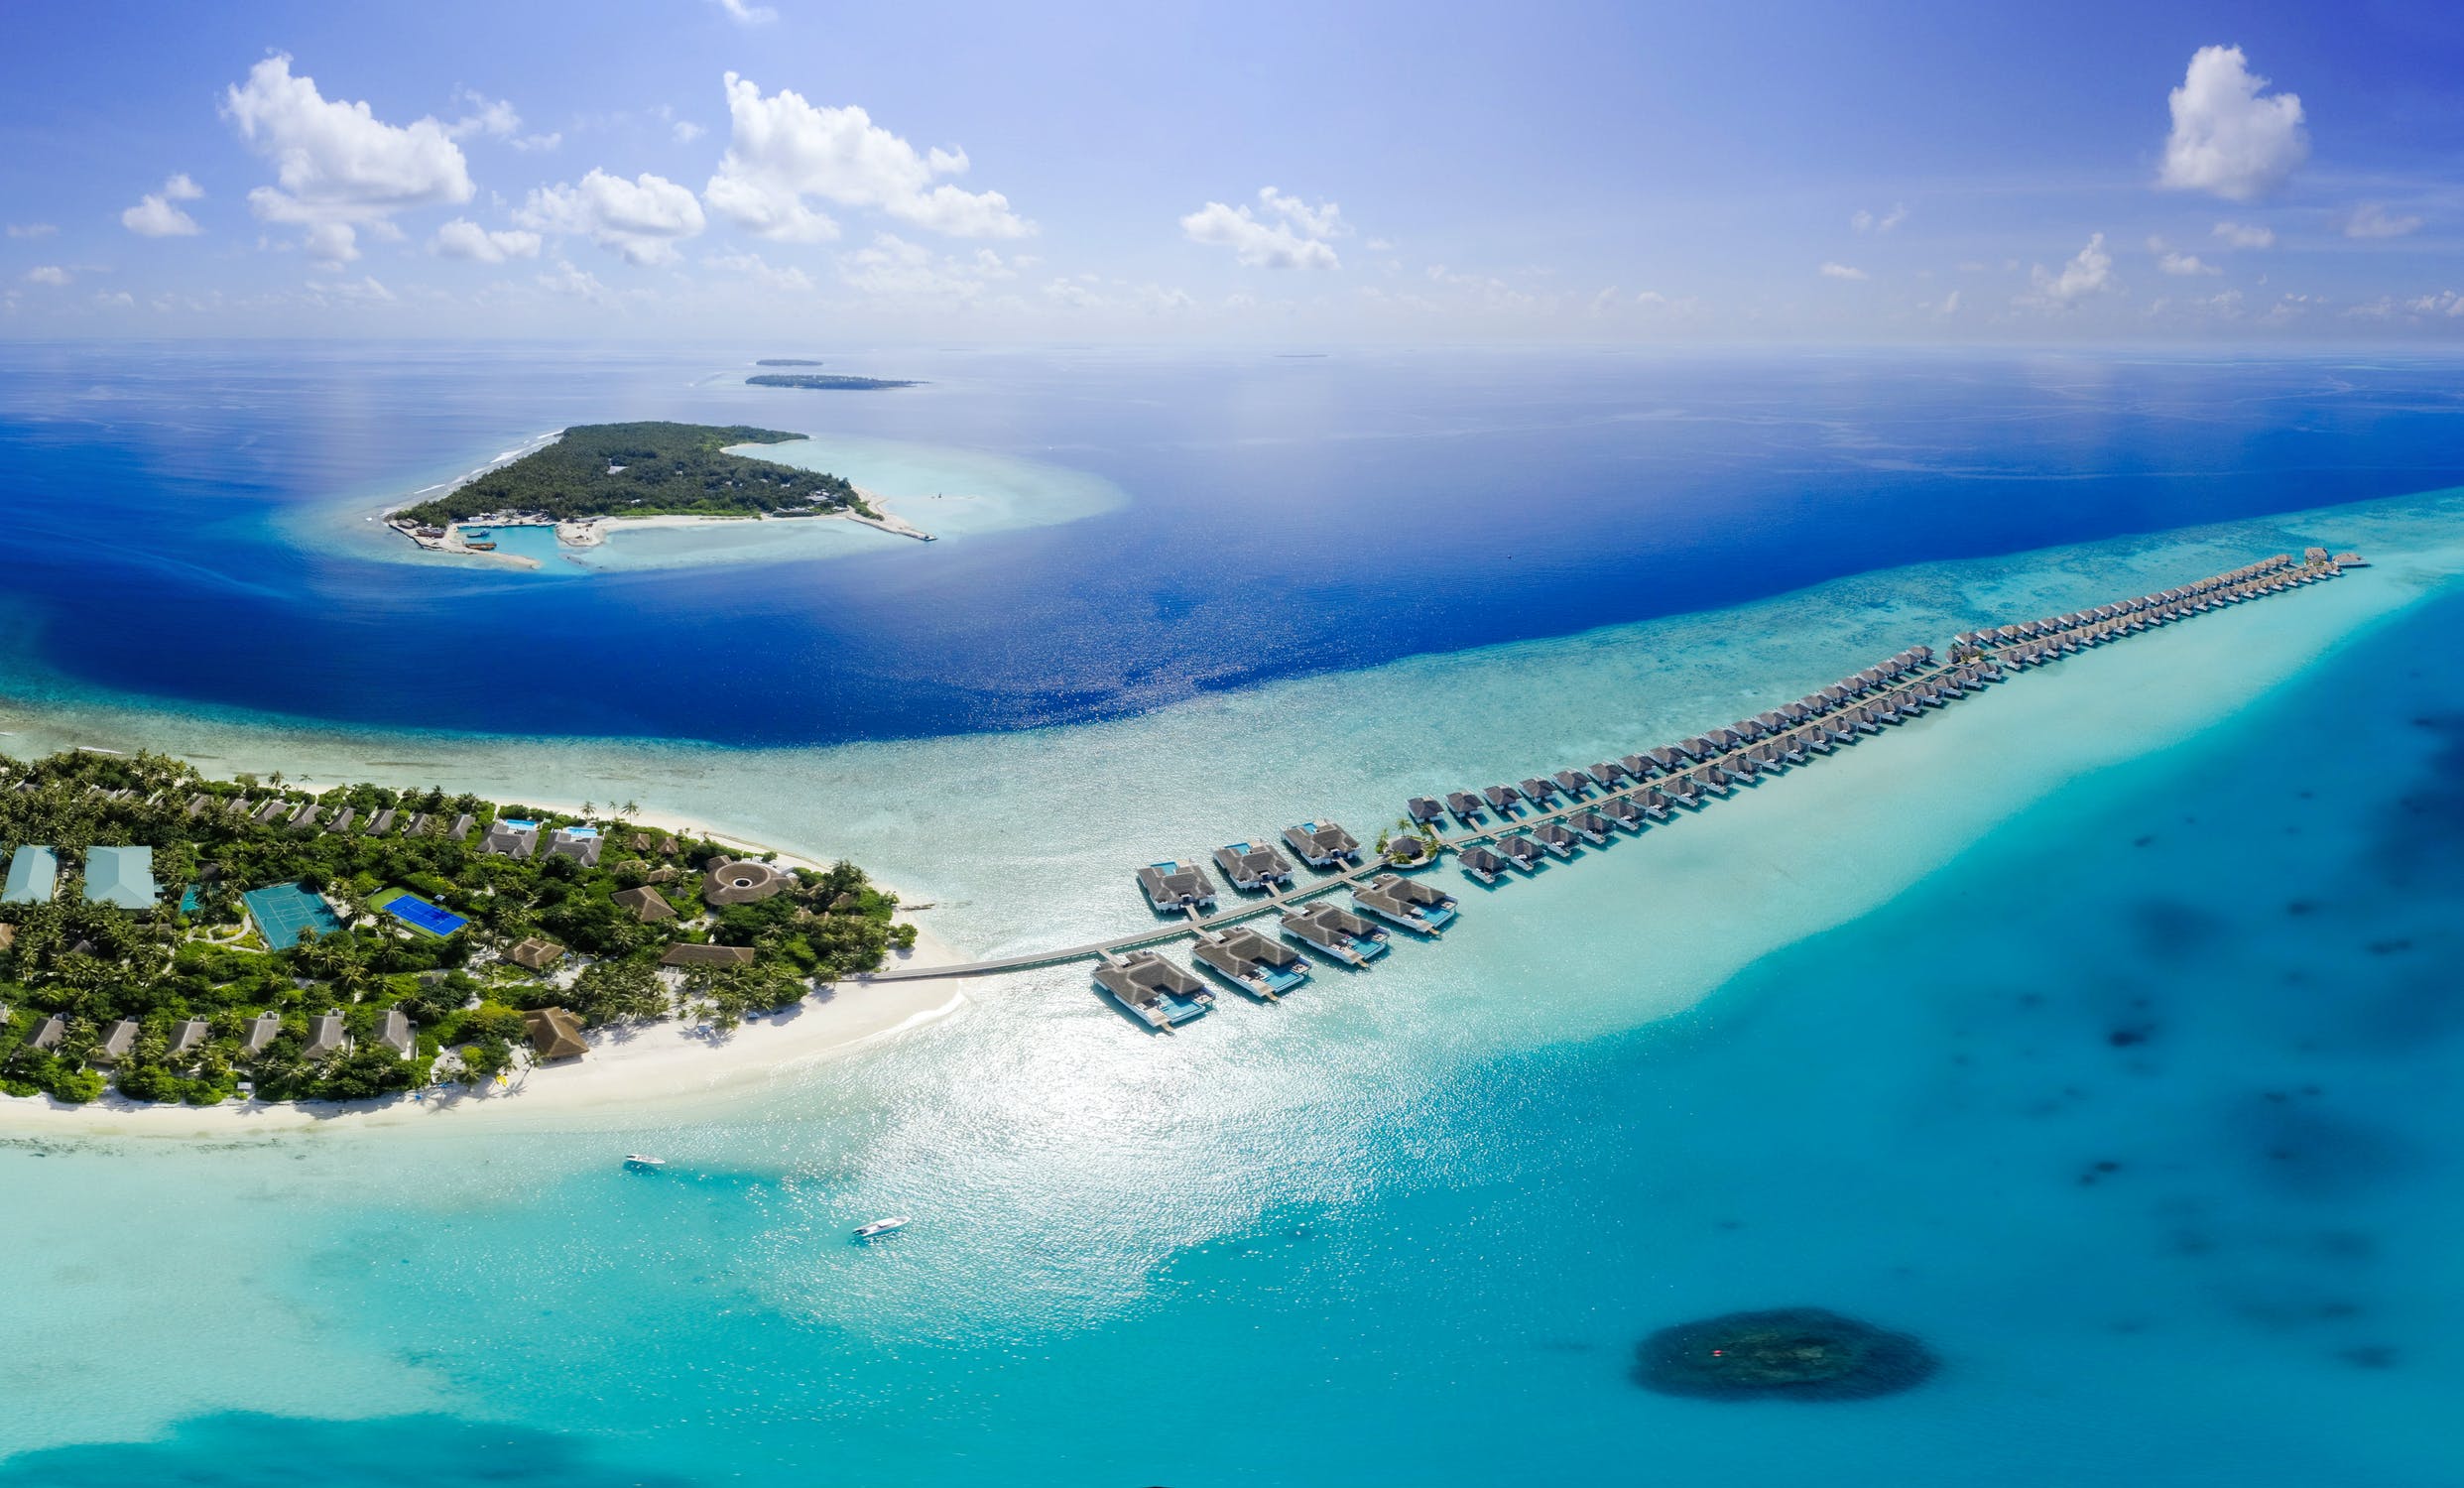 Maldive island in the ocean